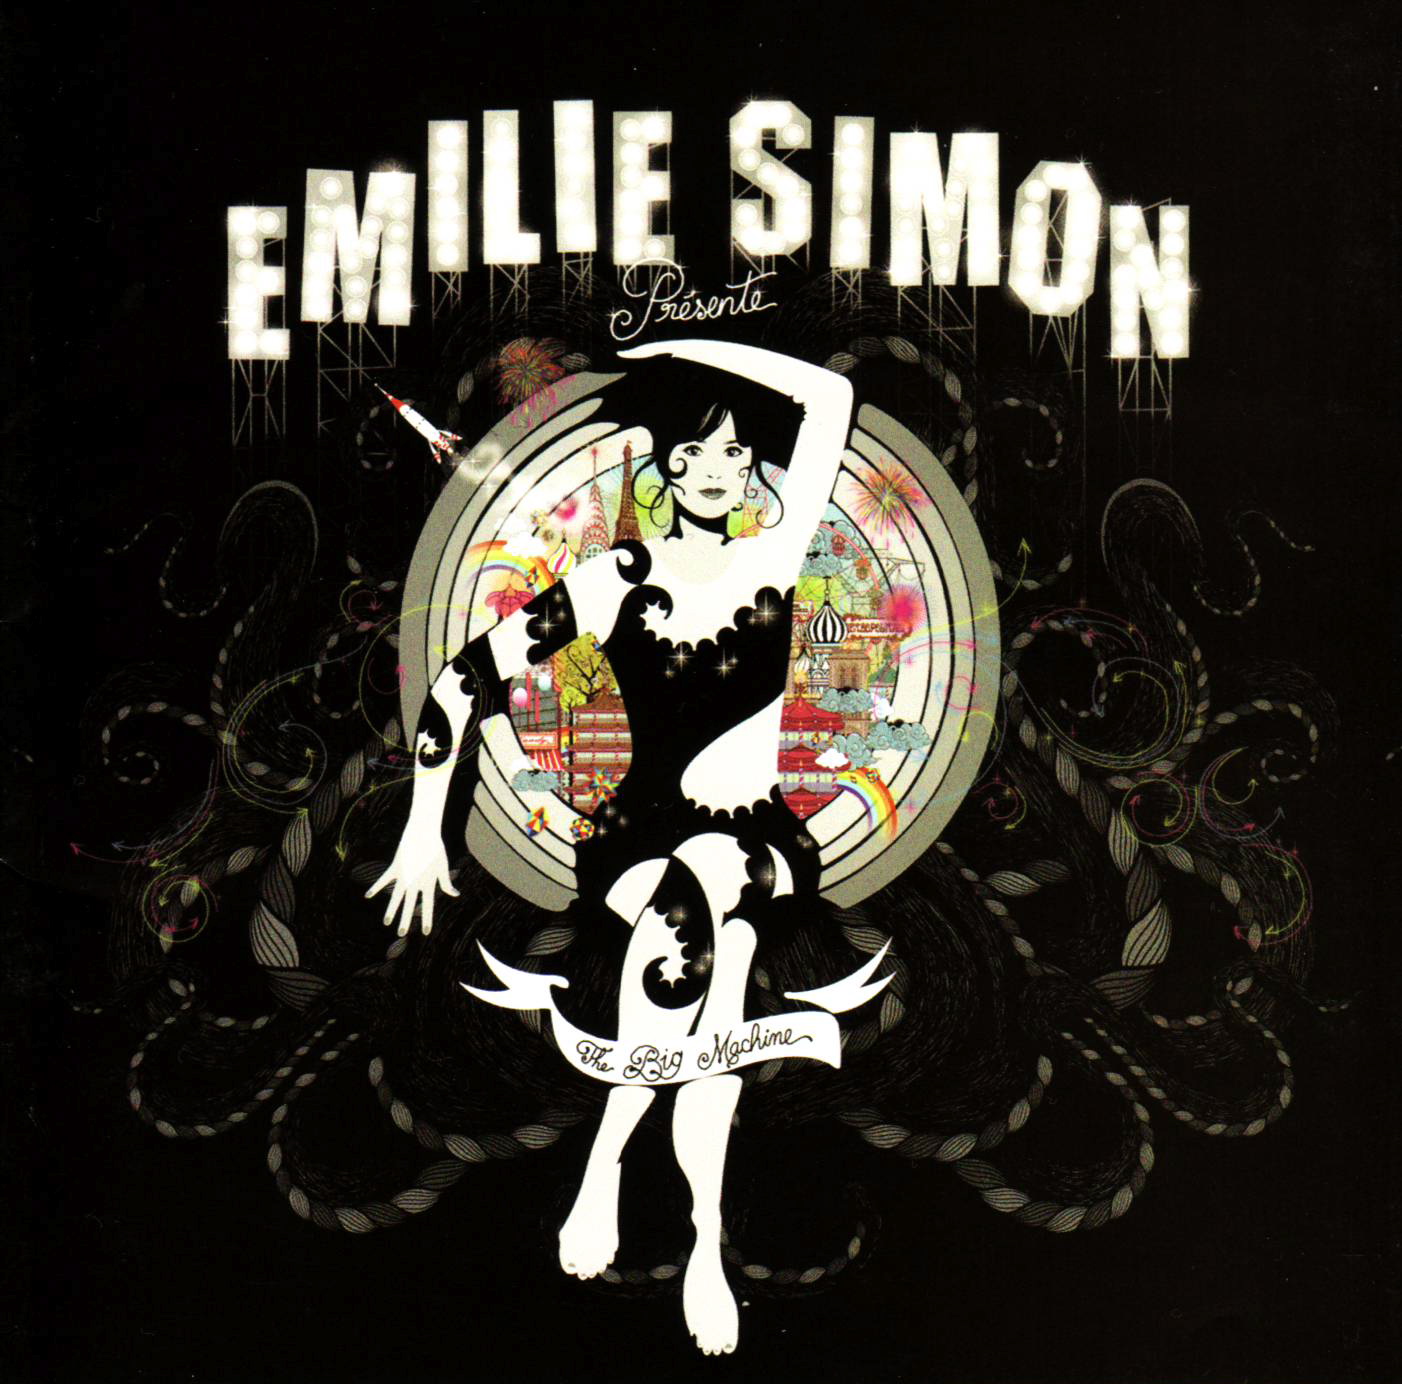 Emilie Simon big machine